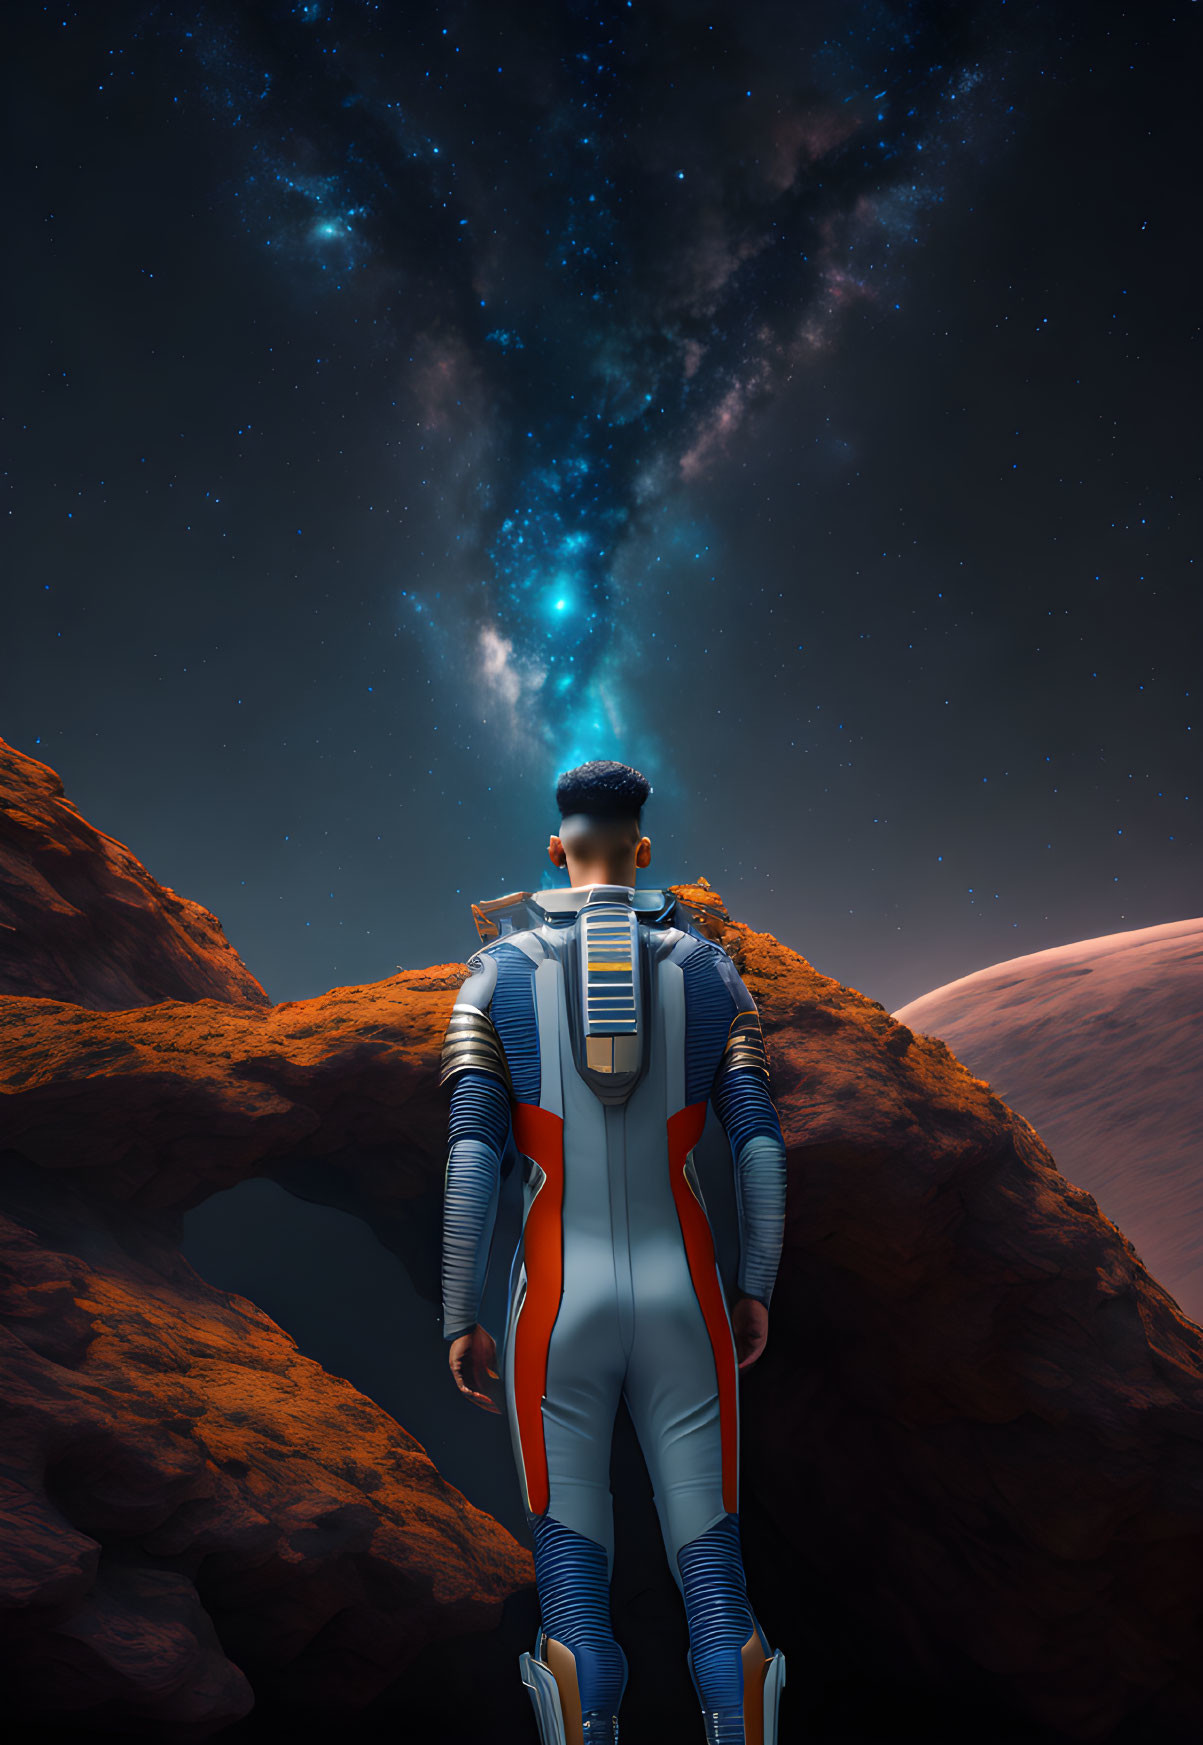 Astronaut on rocky alien terrain under star-studded sky